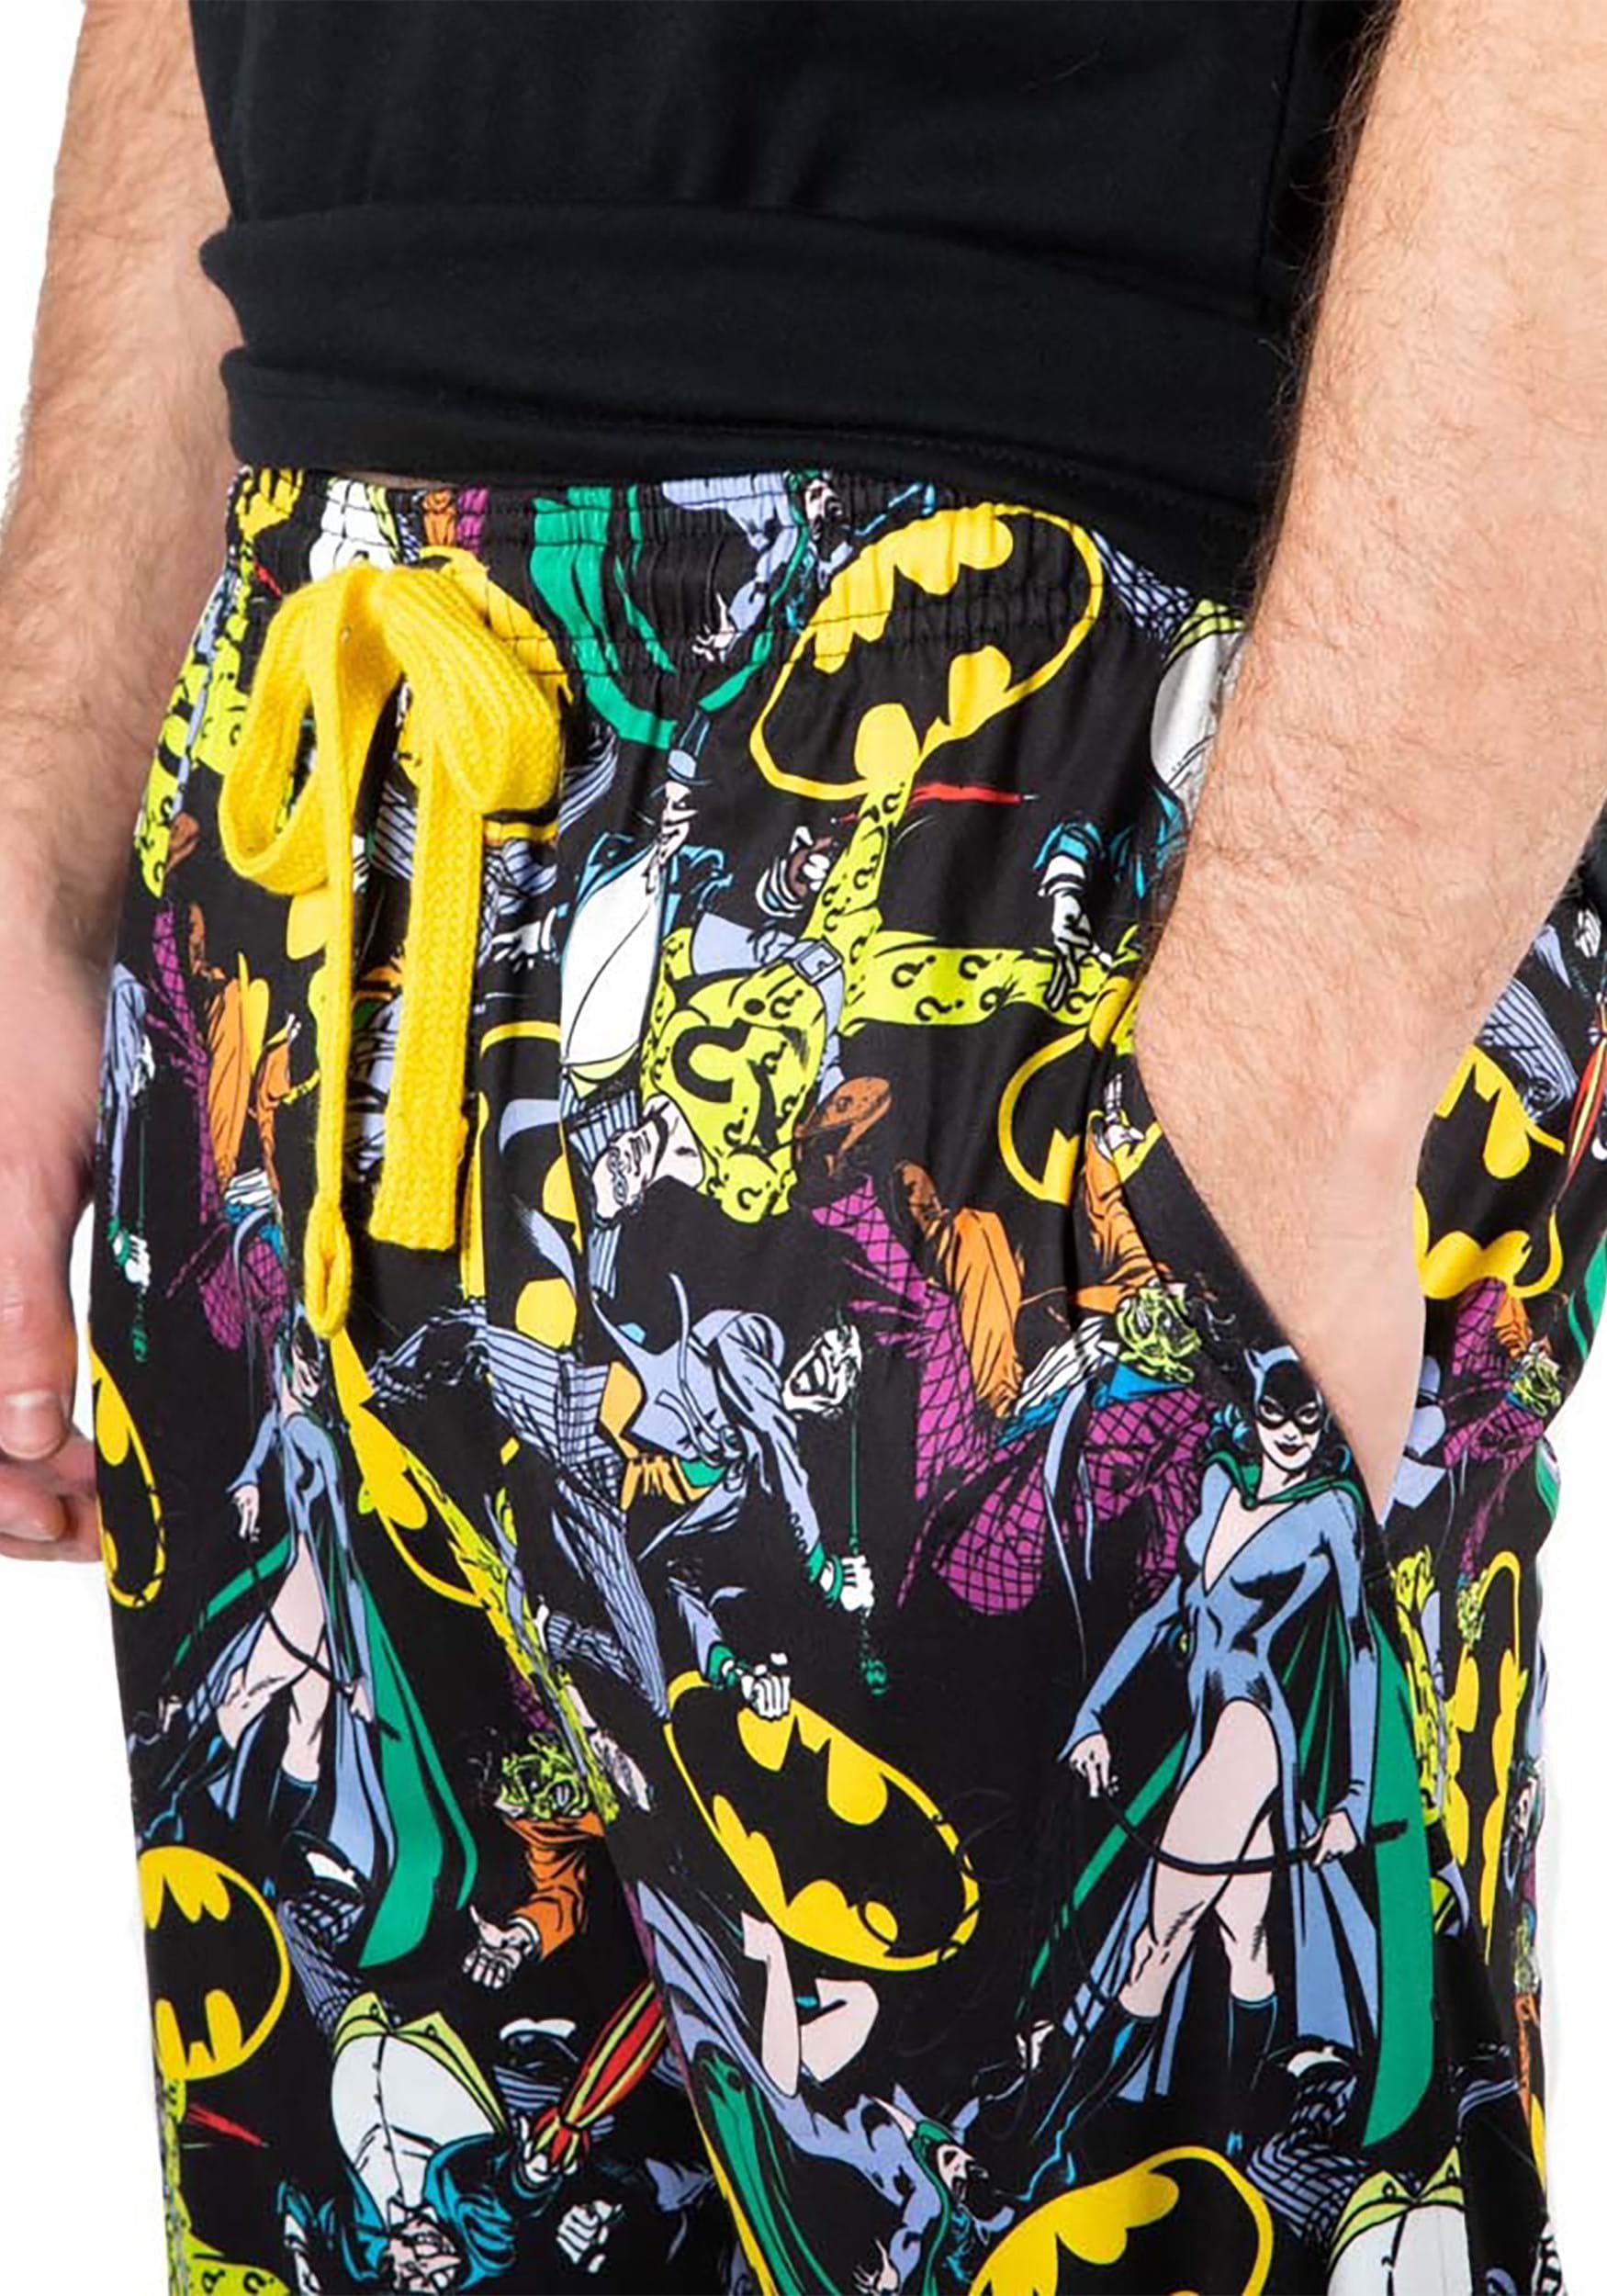 DC Comics Adult Classic Batman Comic Allover Print Loungewear Pajama Pants for Men